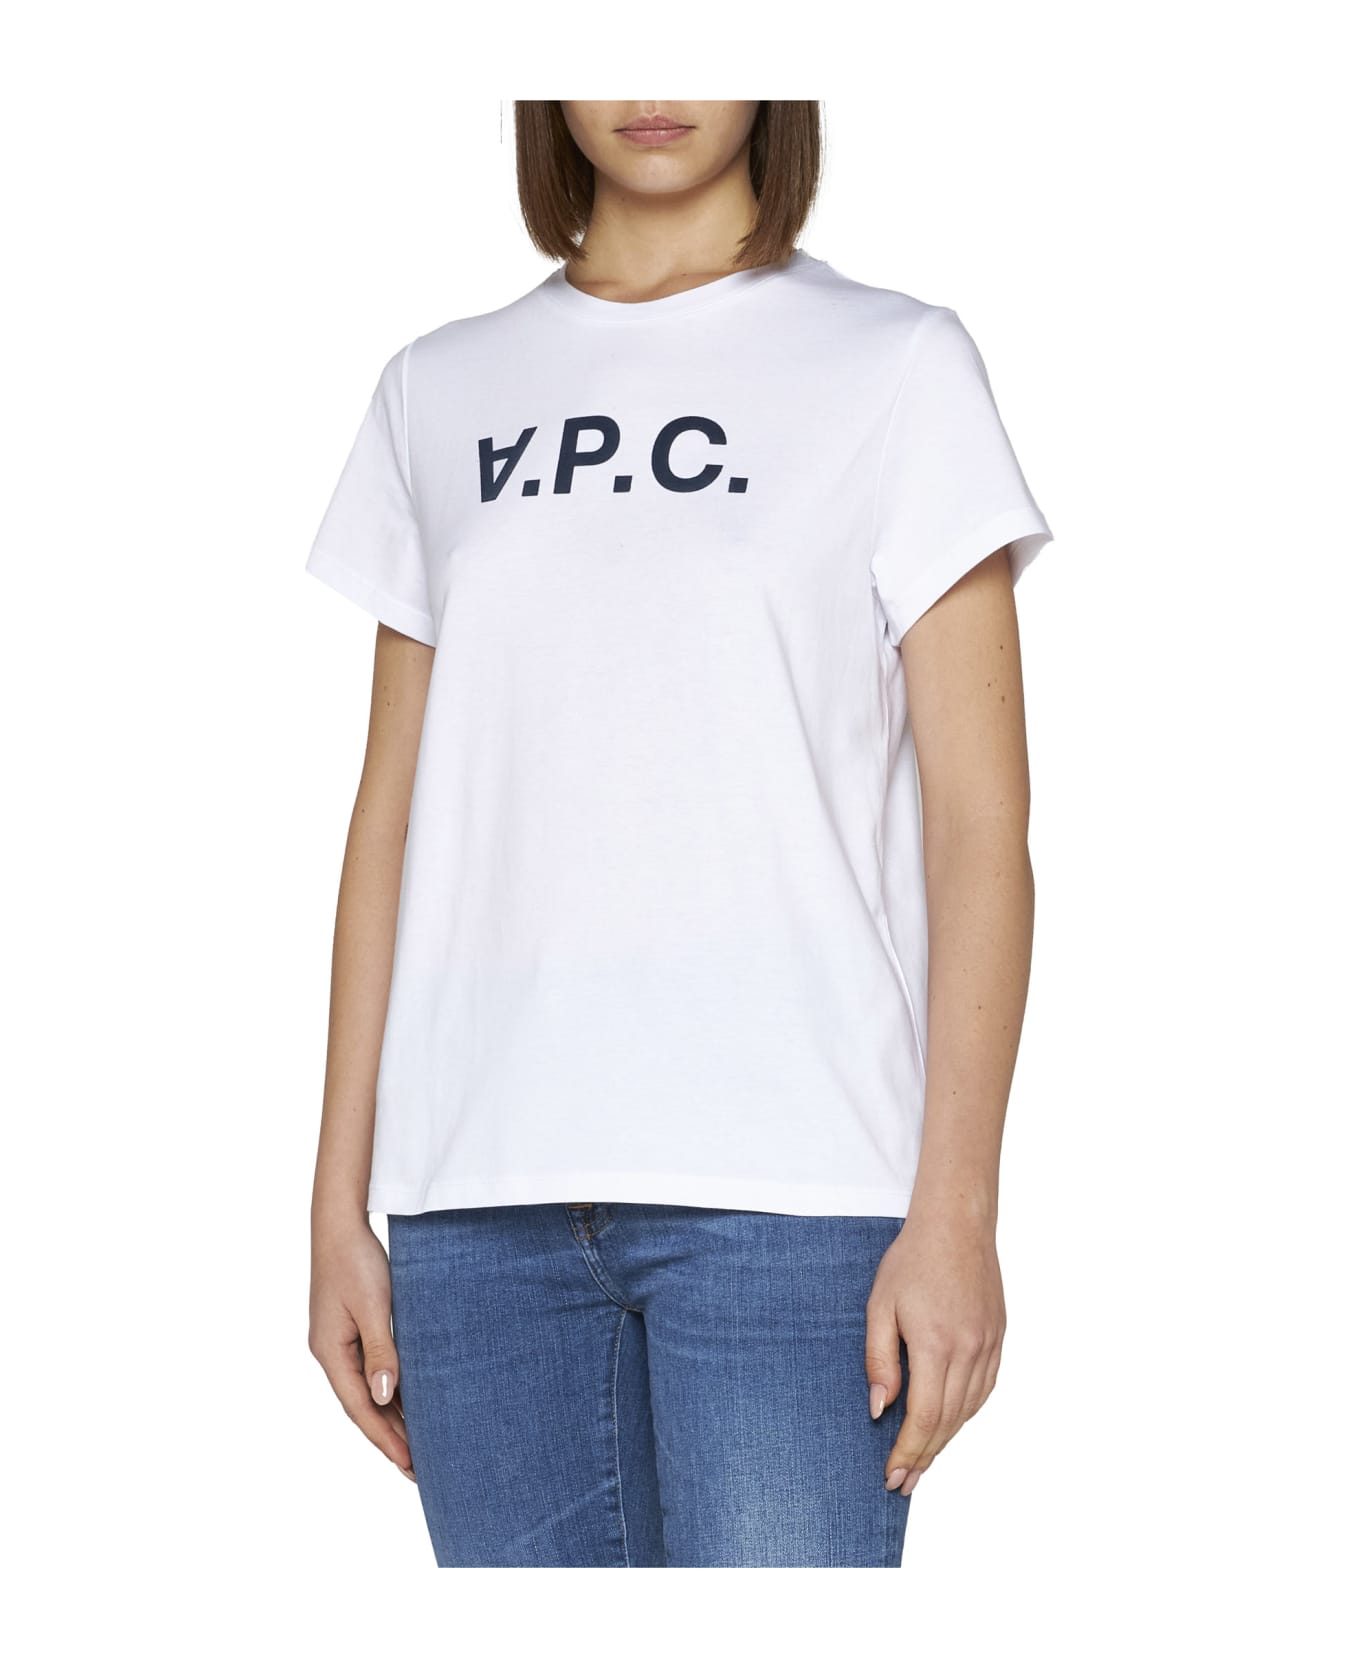 A.P.C. Logo T-shirt - Blue Tシャツ